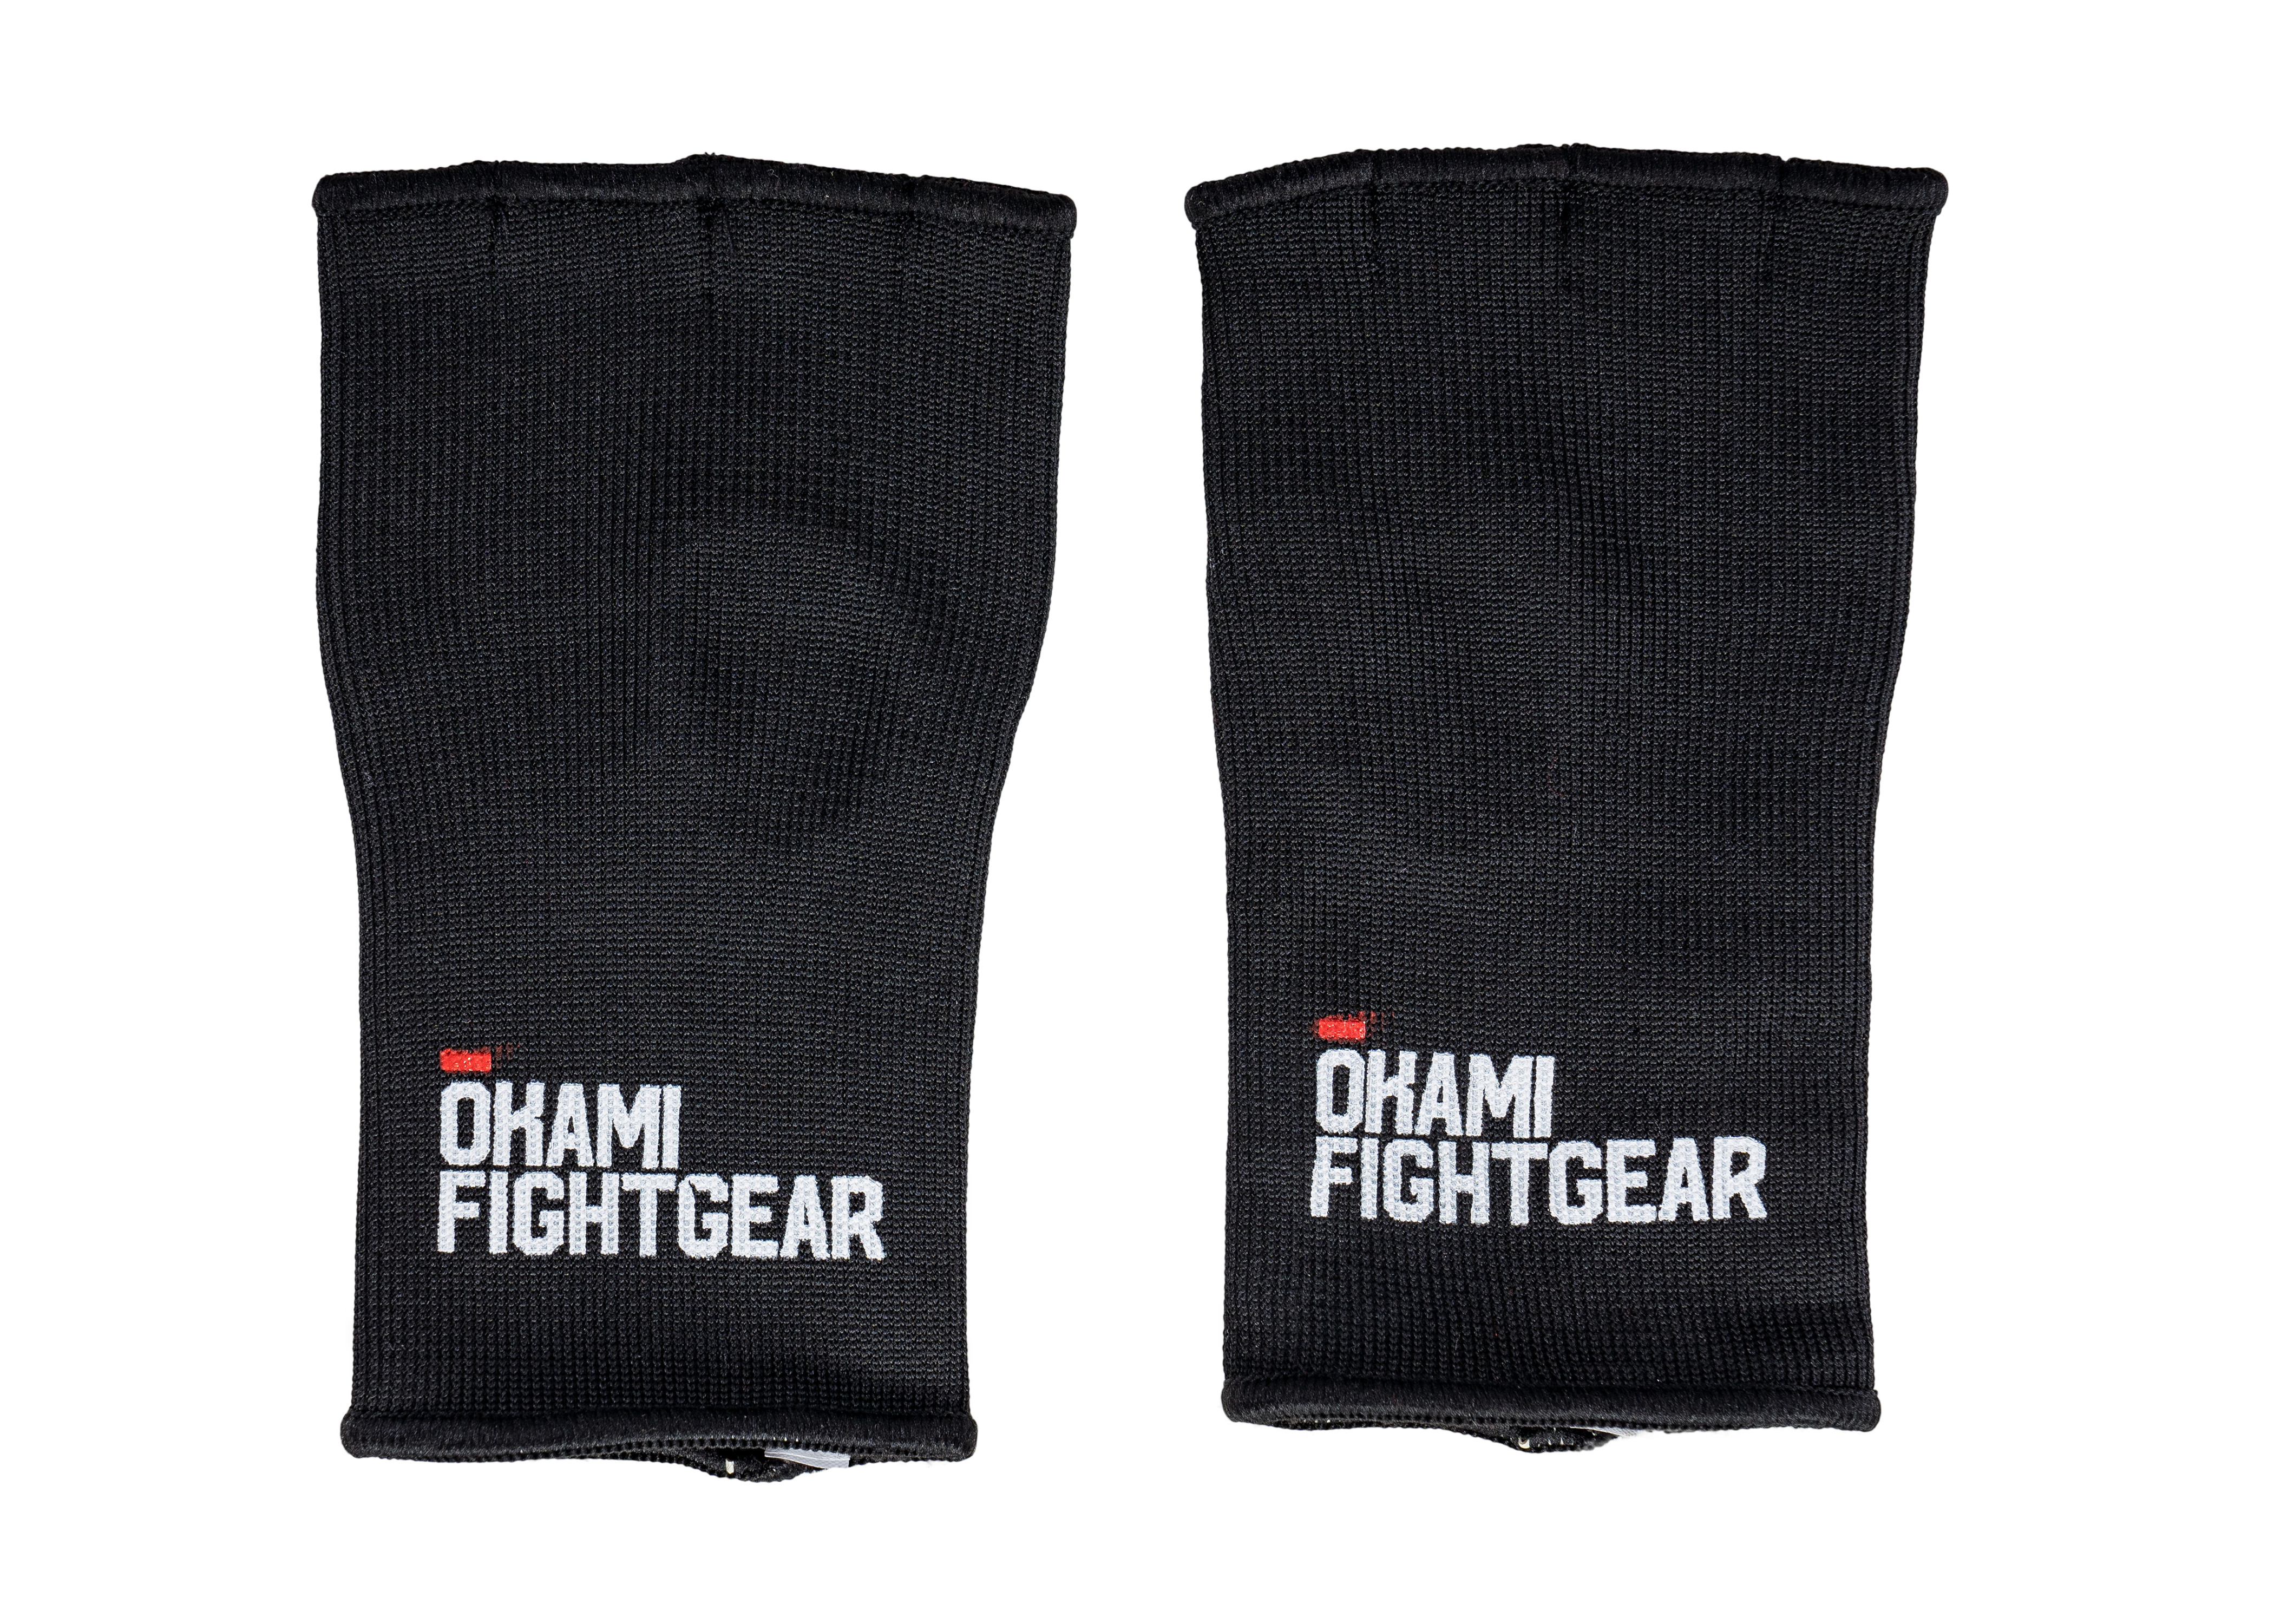 Okami Fightgear Unterhandschuh  (Größe S) (Paar)